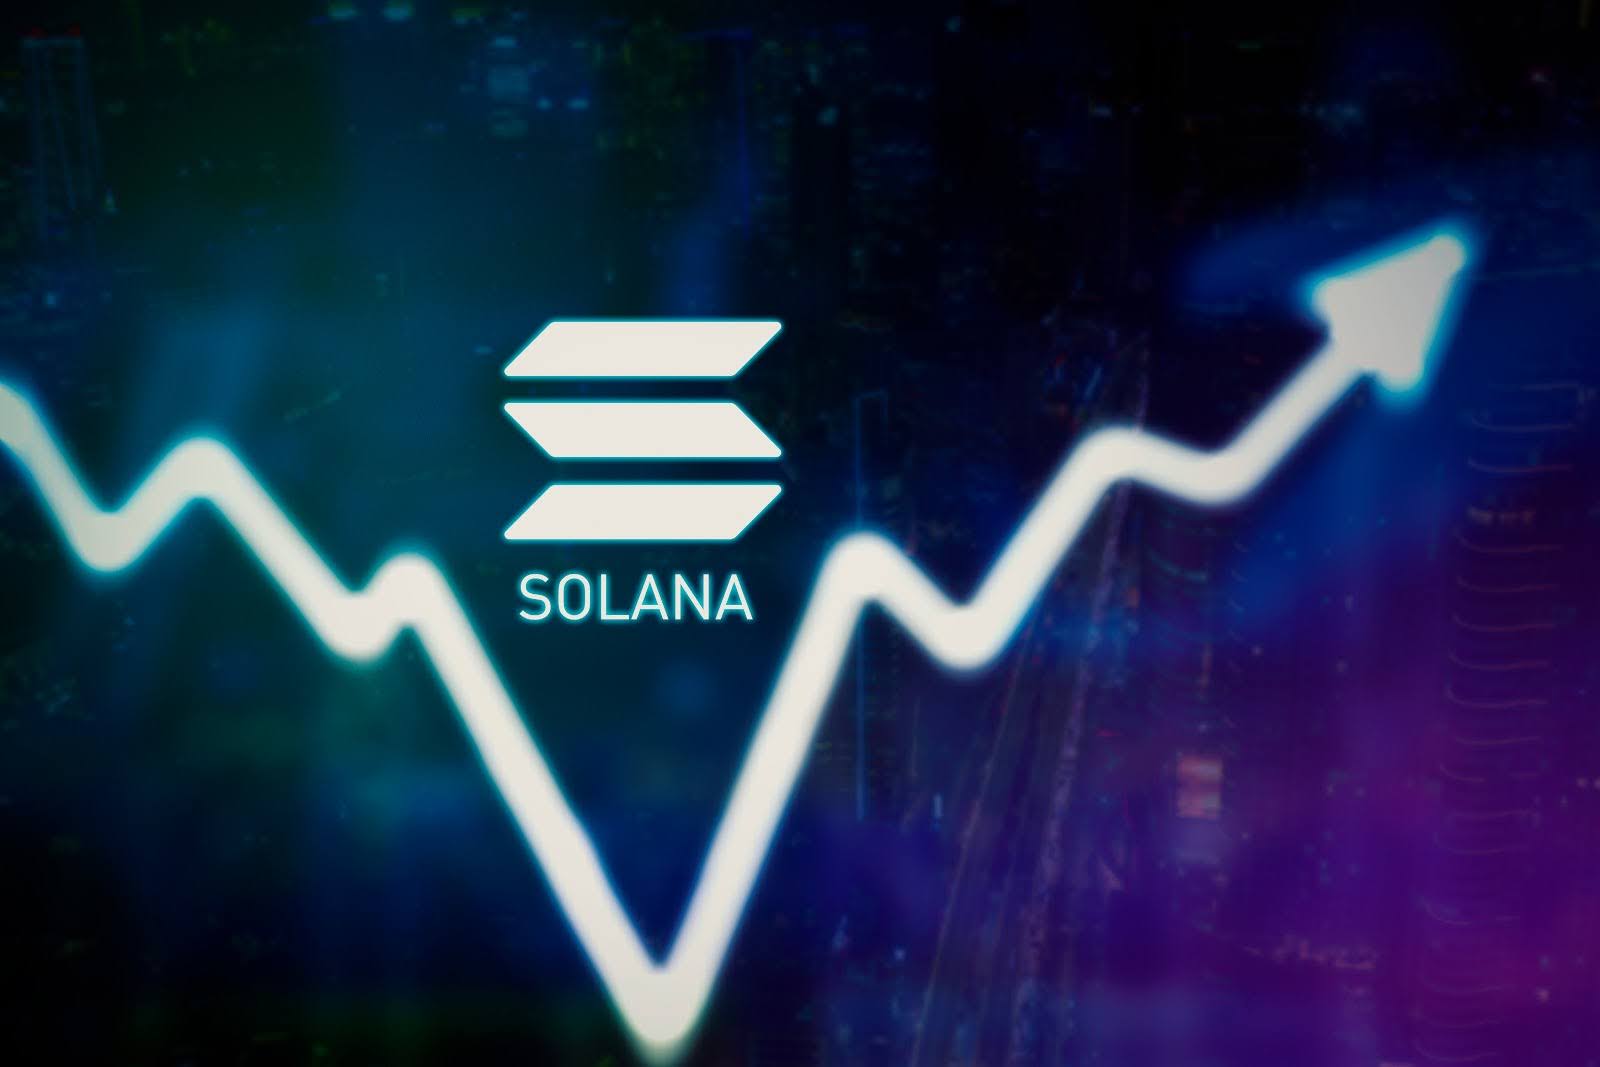 Solana (SOL) price prediction as the new Solana meme coin launches tomorrow